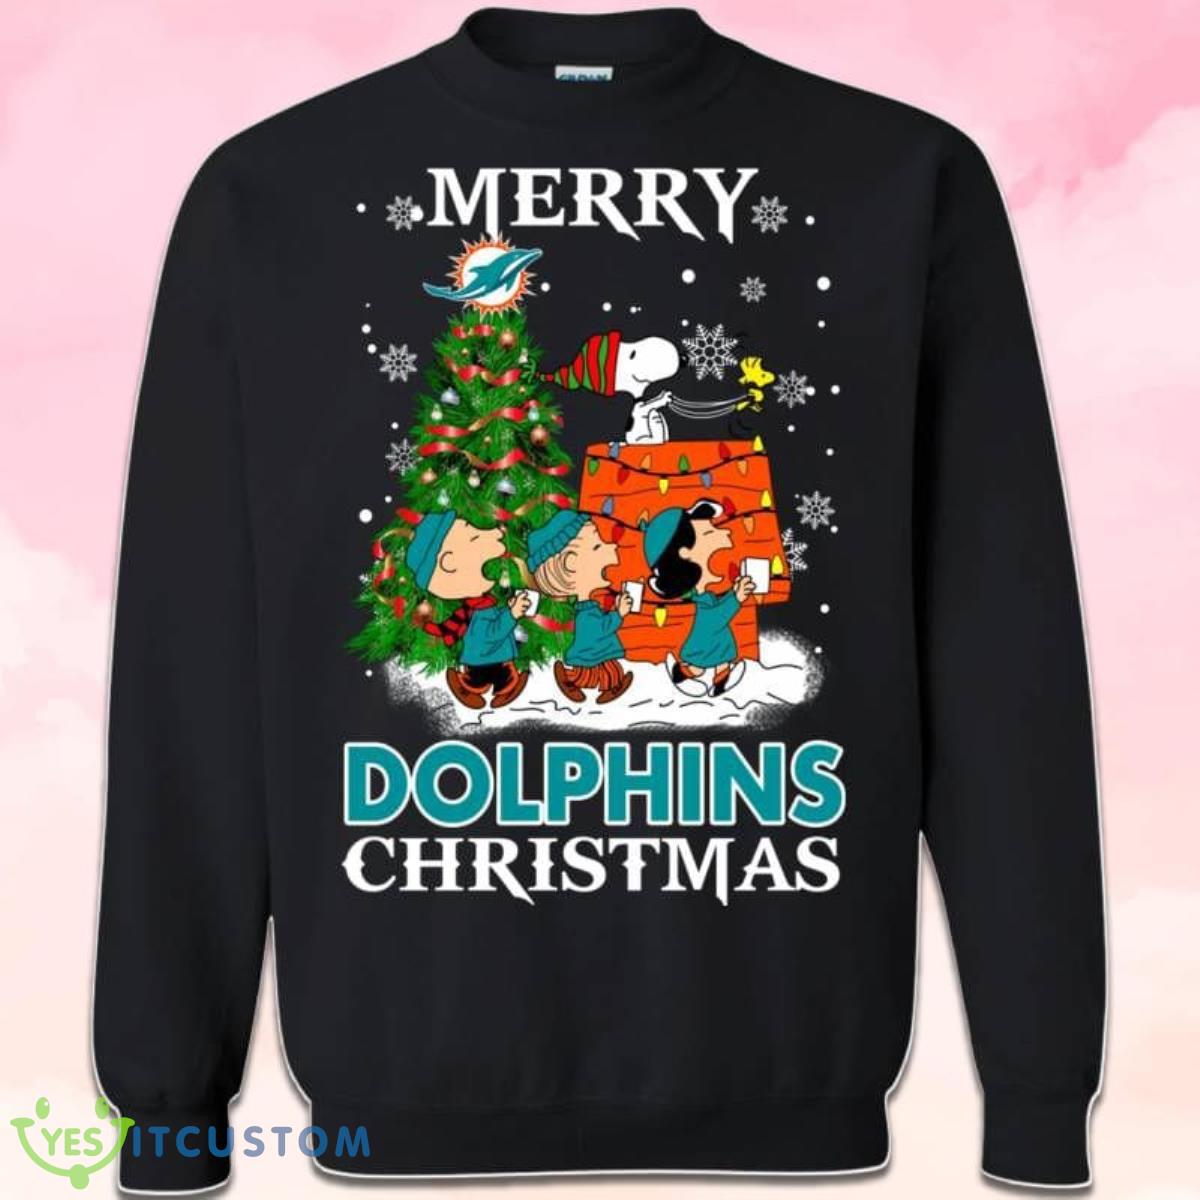 Miami Dolphins Shop - Merry Miami Dolphins Christmas Snoopy Sweatshirt